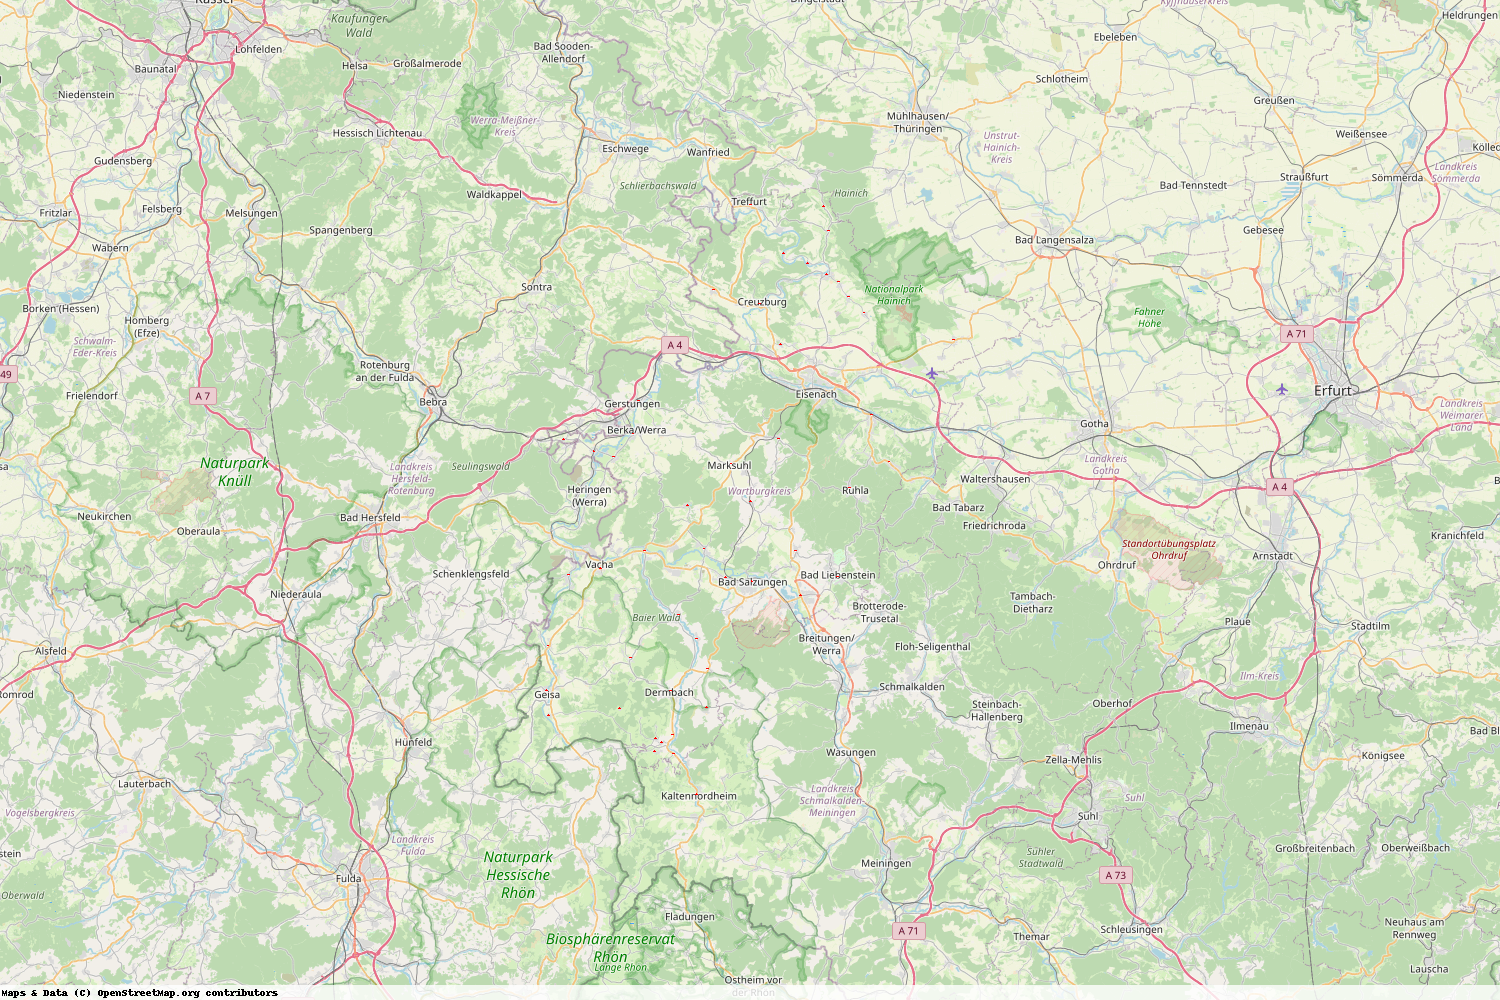 Ist gerade Stromausfall in Thüringen - Wartburgkreis?